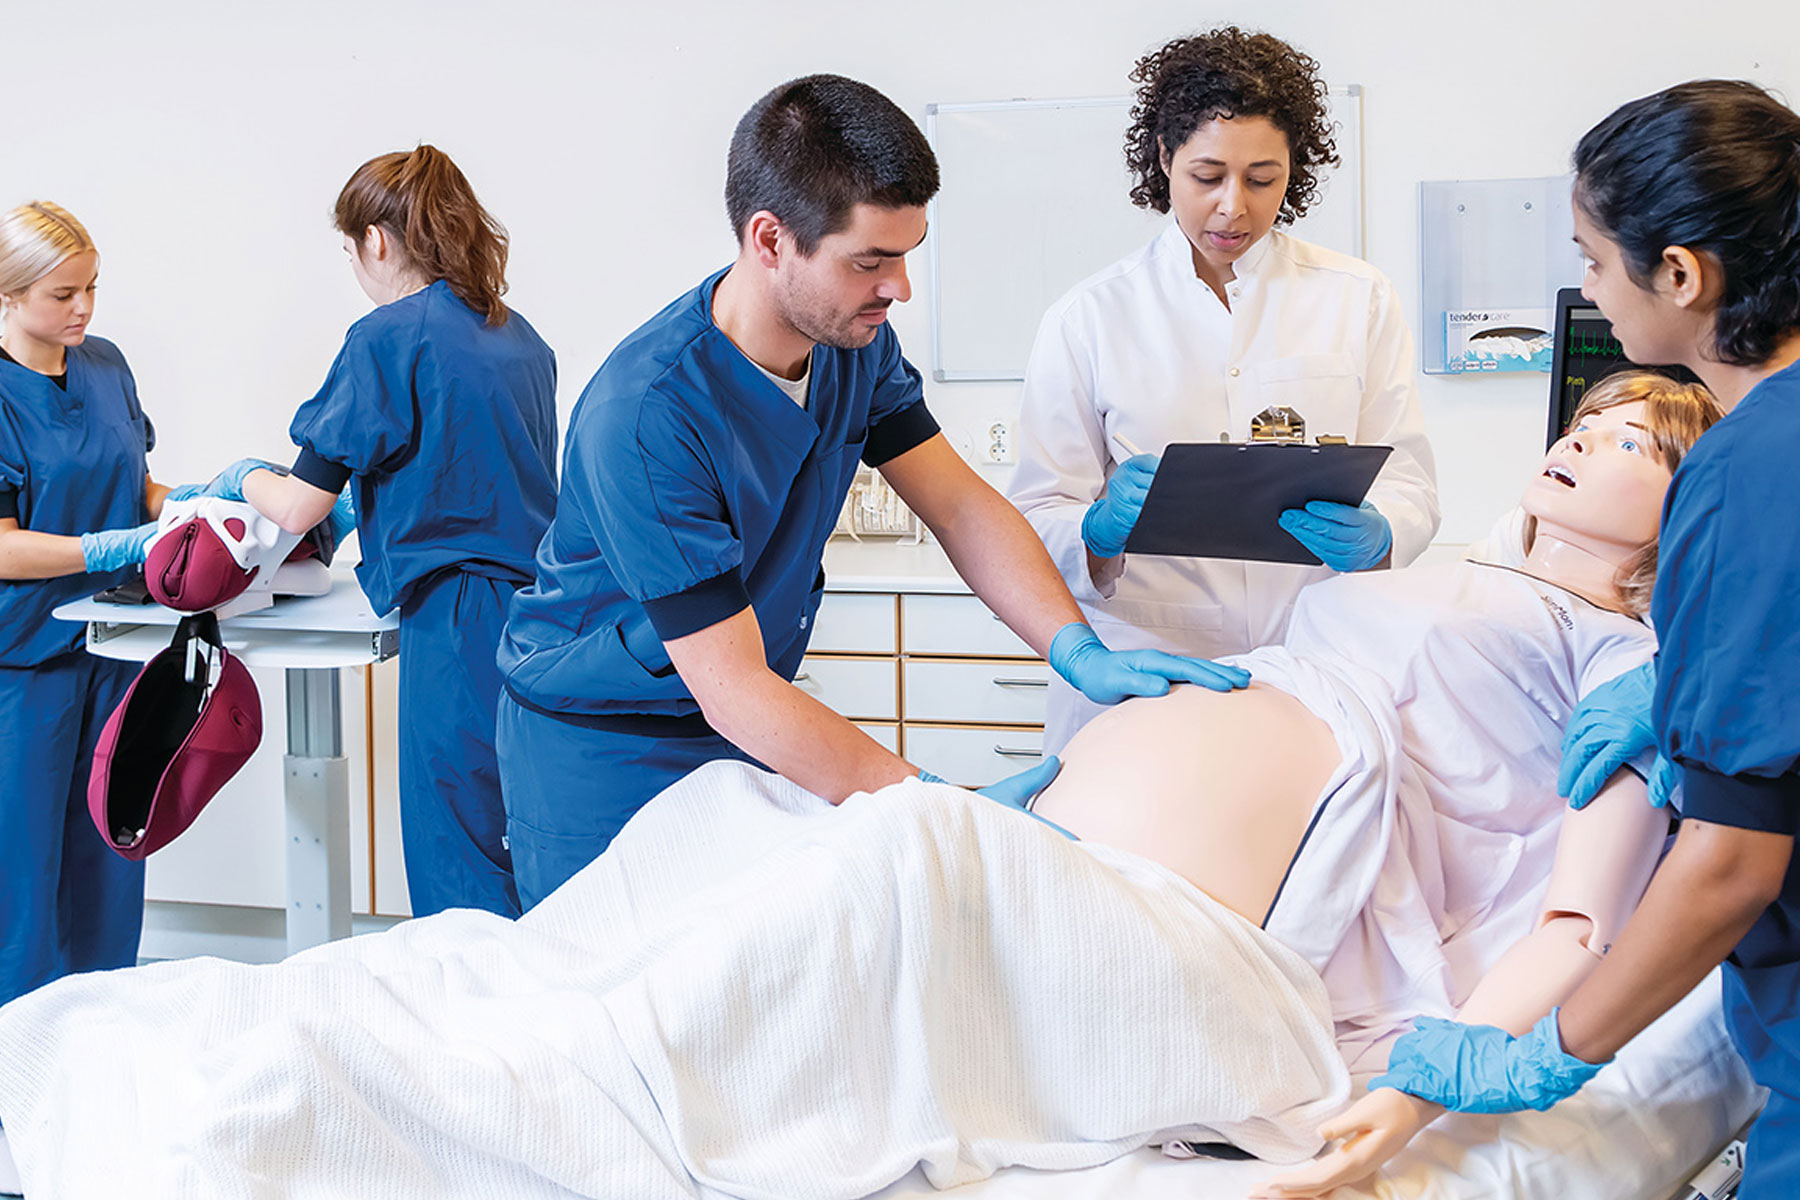 Childbirth simulator delivers lifesaving skills